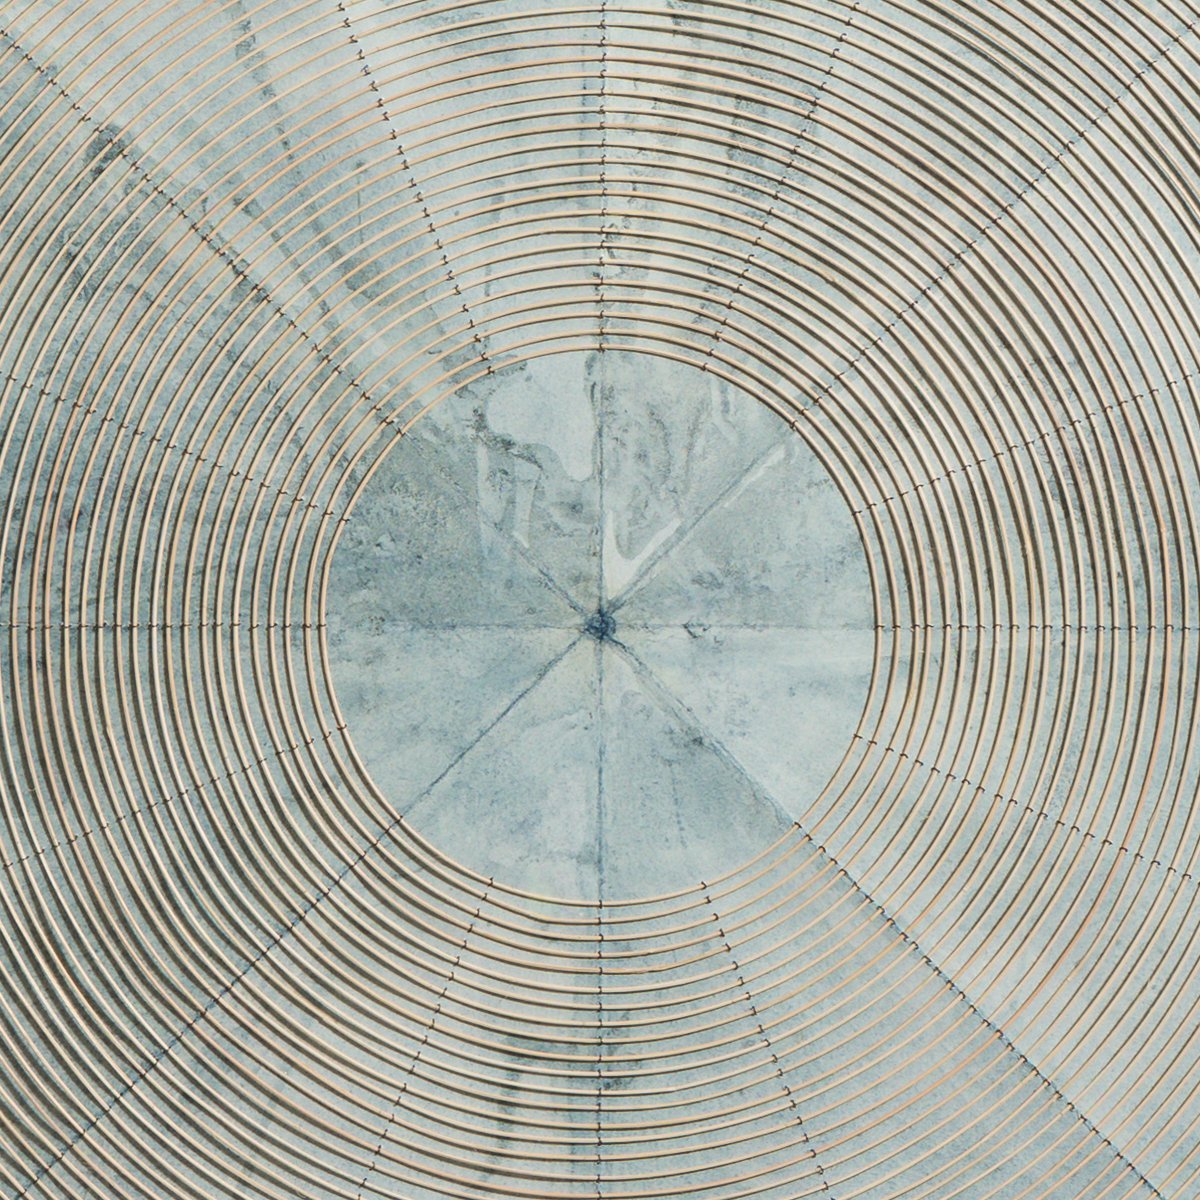 "Blue Ripple" Geometric Art with Reeds on Paper by Katrine Hildebrandt-Hussey @ Soapbox Arts Gallery, Burlington, VT 